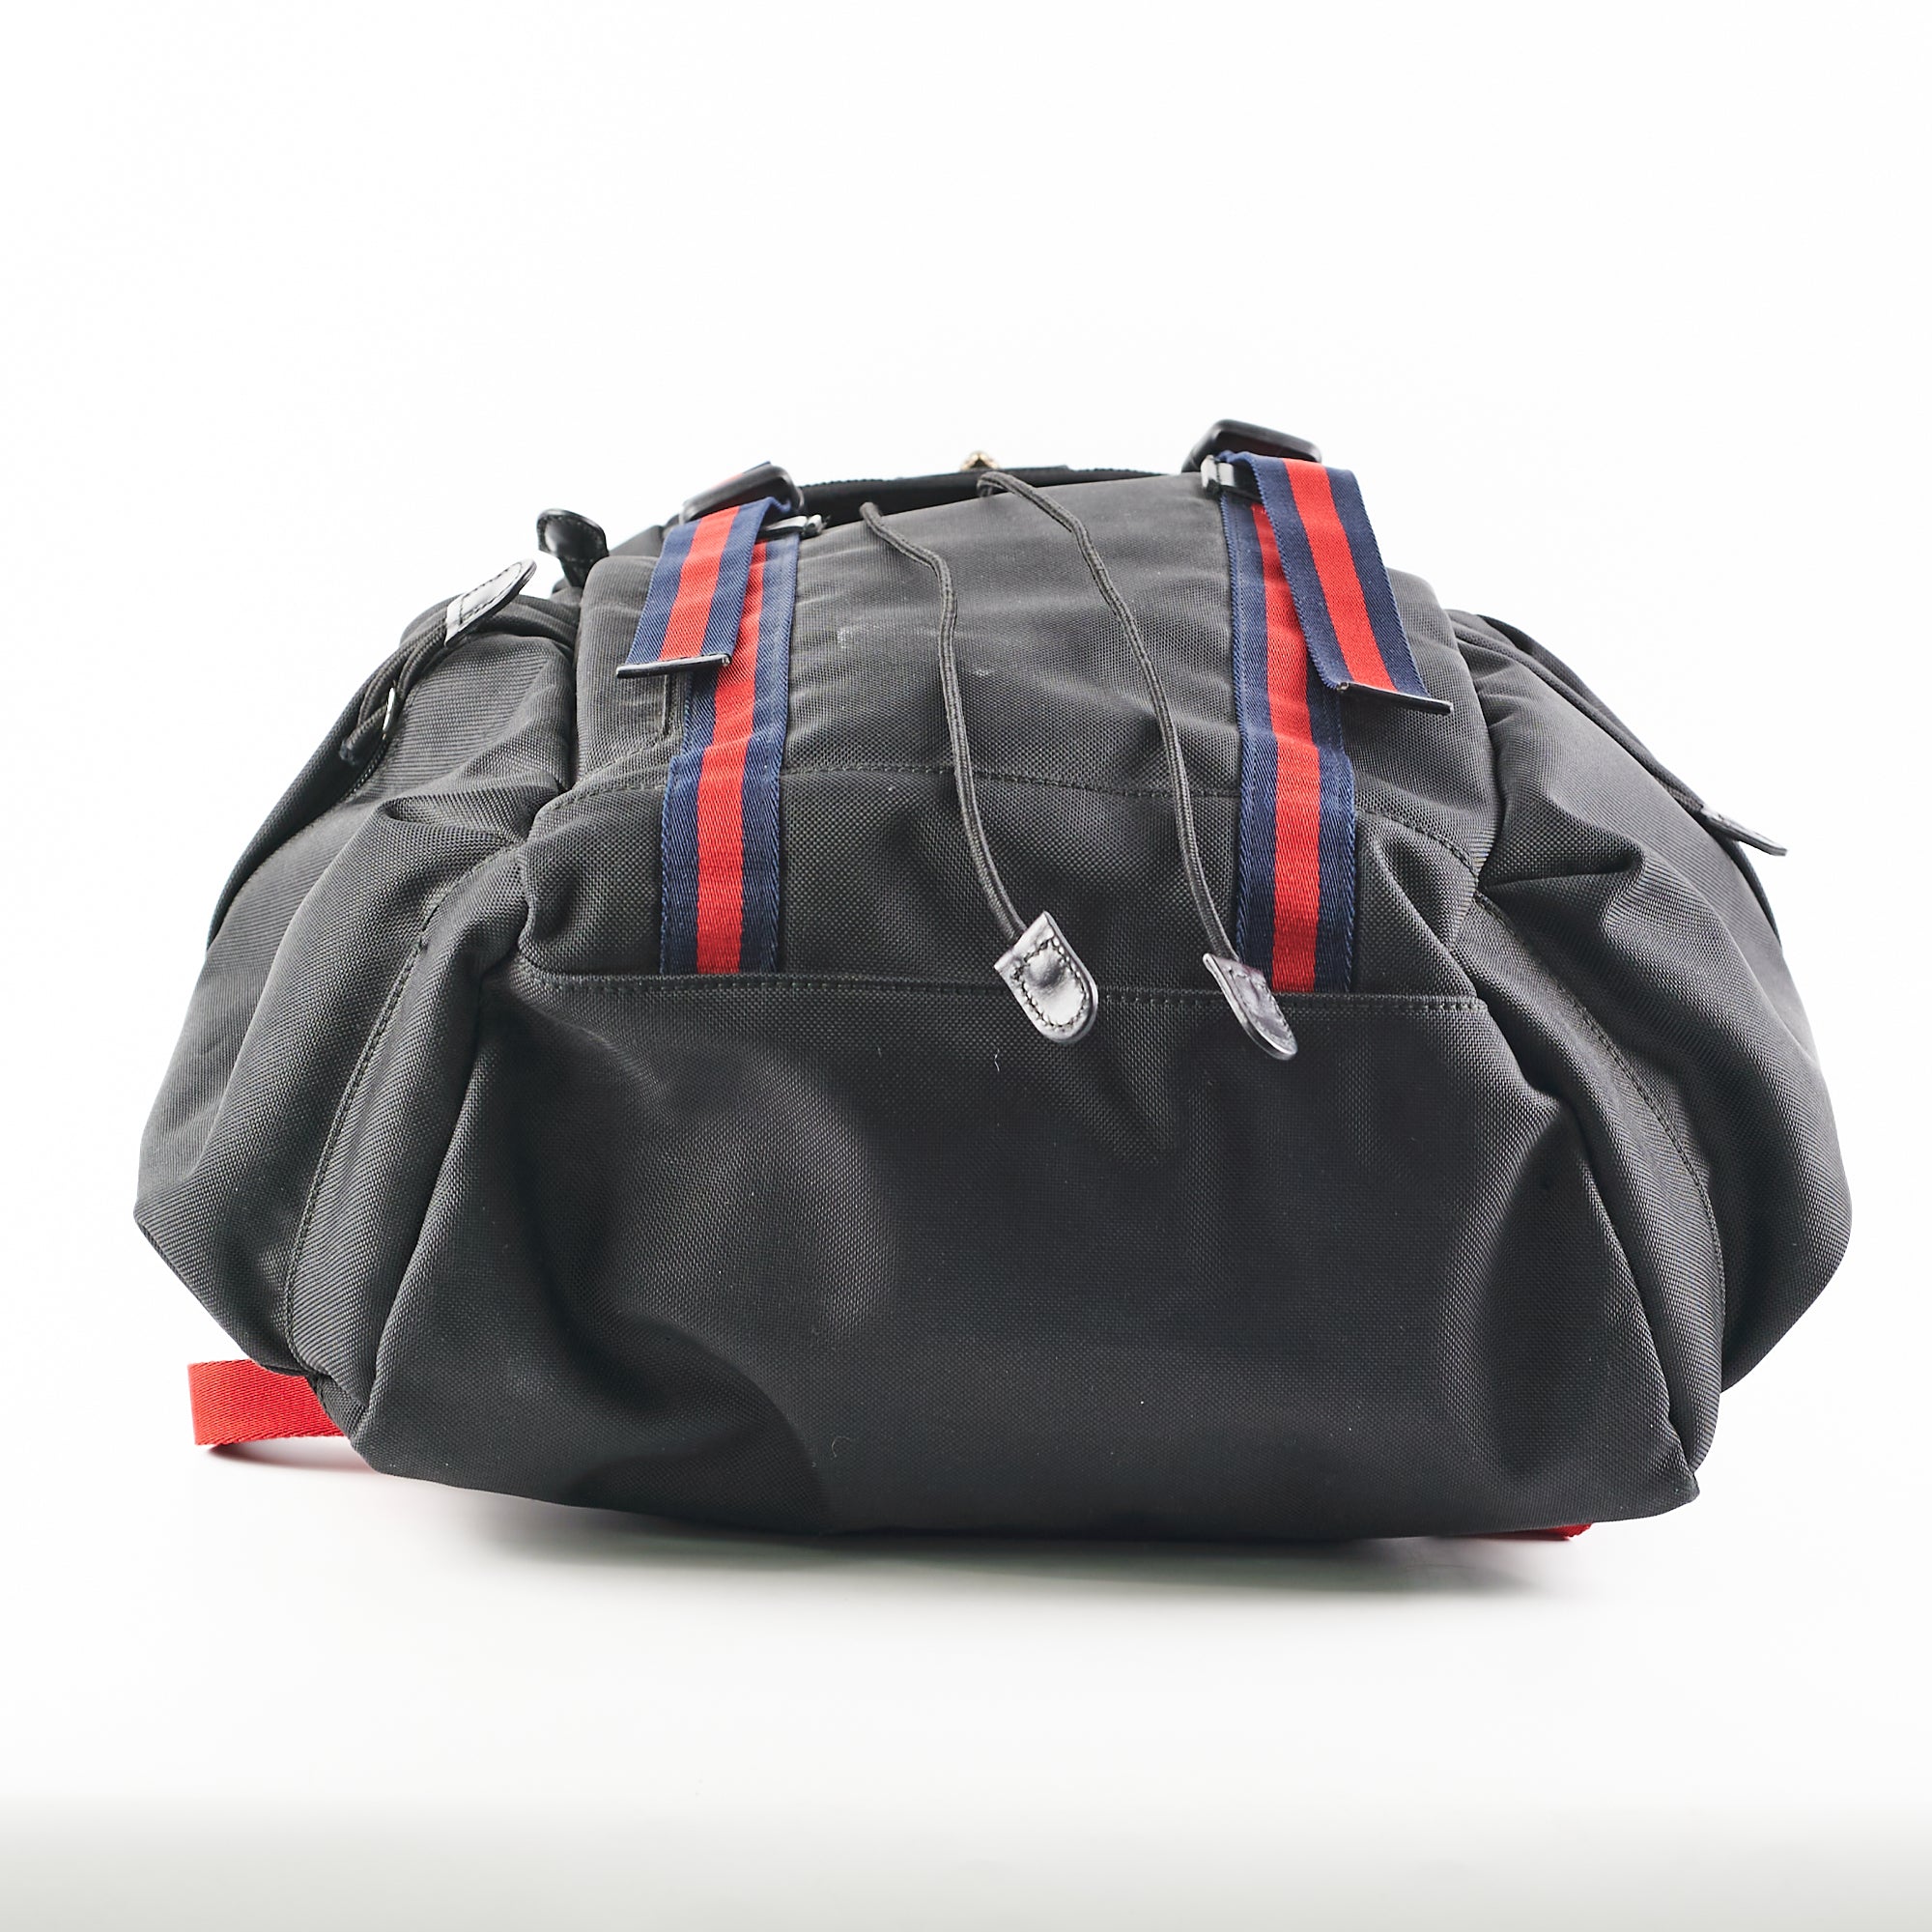 Gucci Techco Black Canvas Backpack - THE PURSE AFFAIR